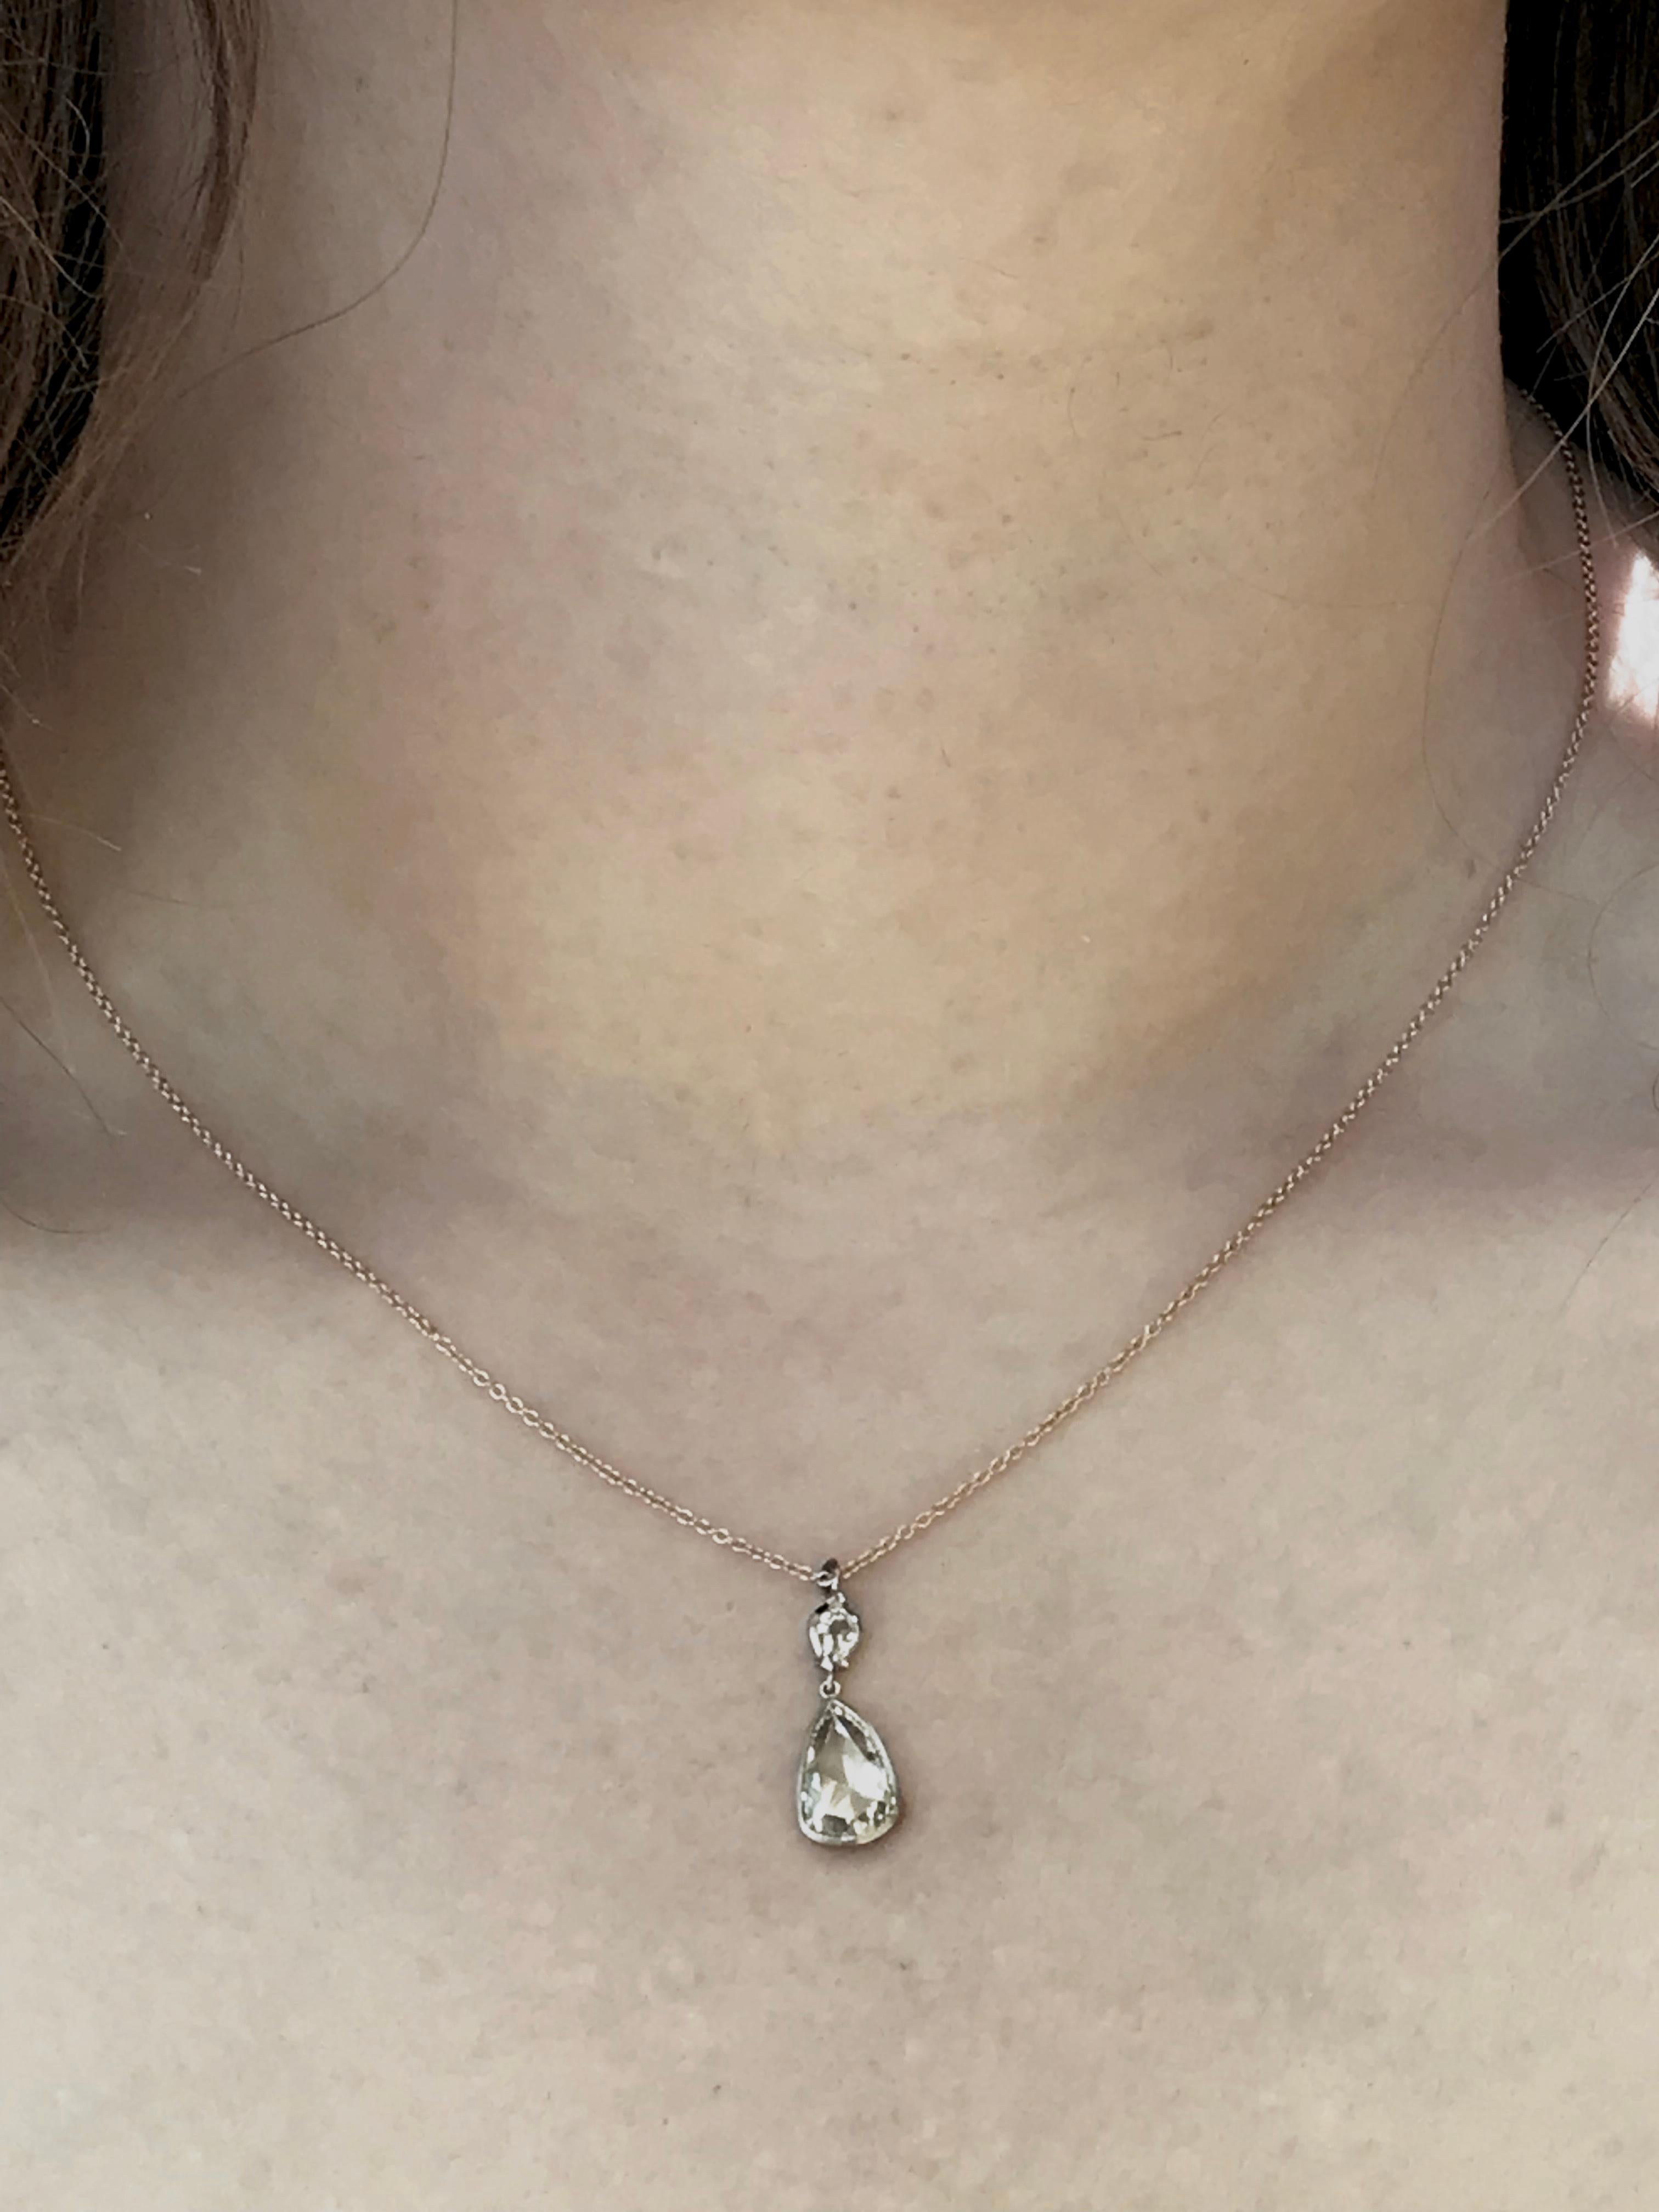 Dalben 1.2 Carat Pear Shape Diamond White Gold Necklace In New Condition For Sale In Como, IT